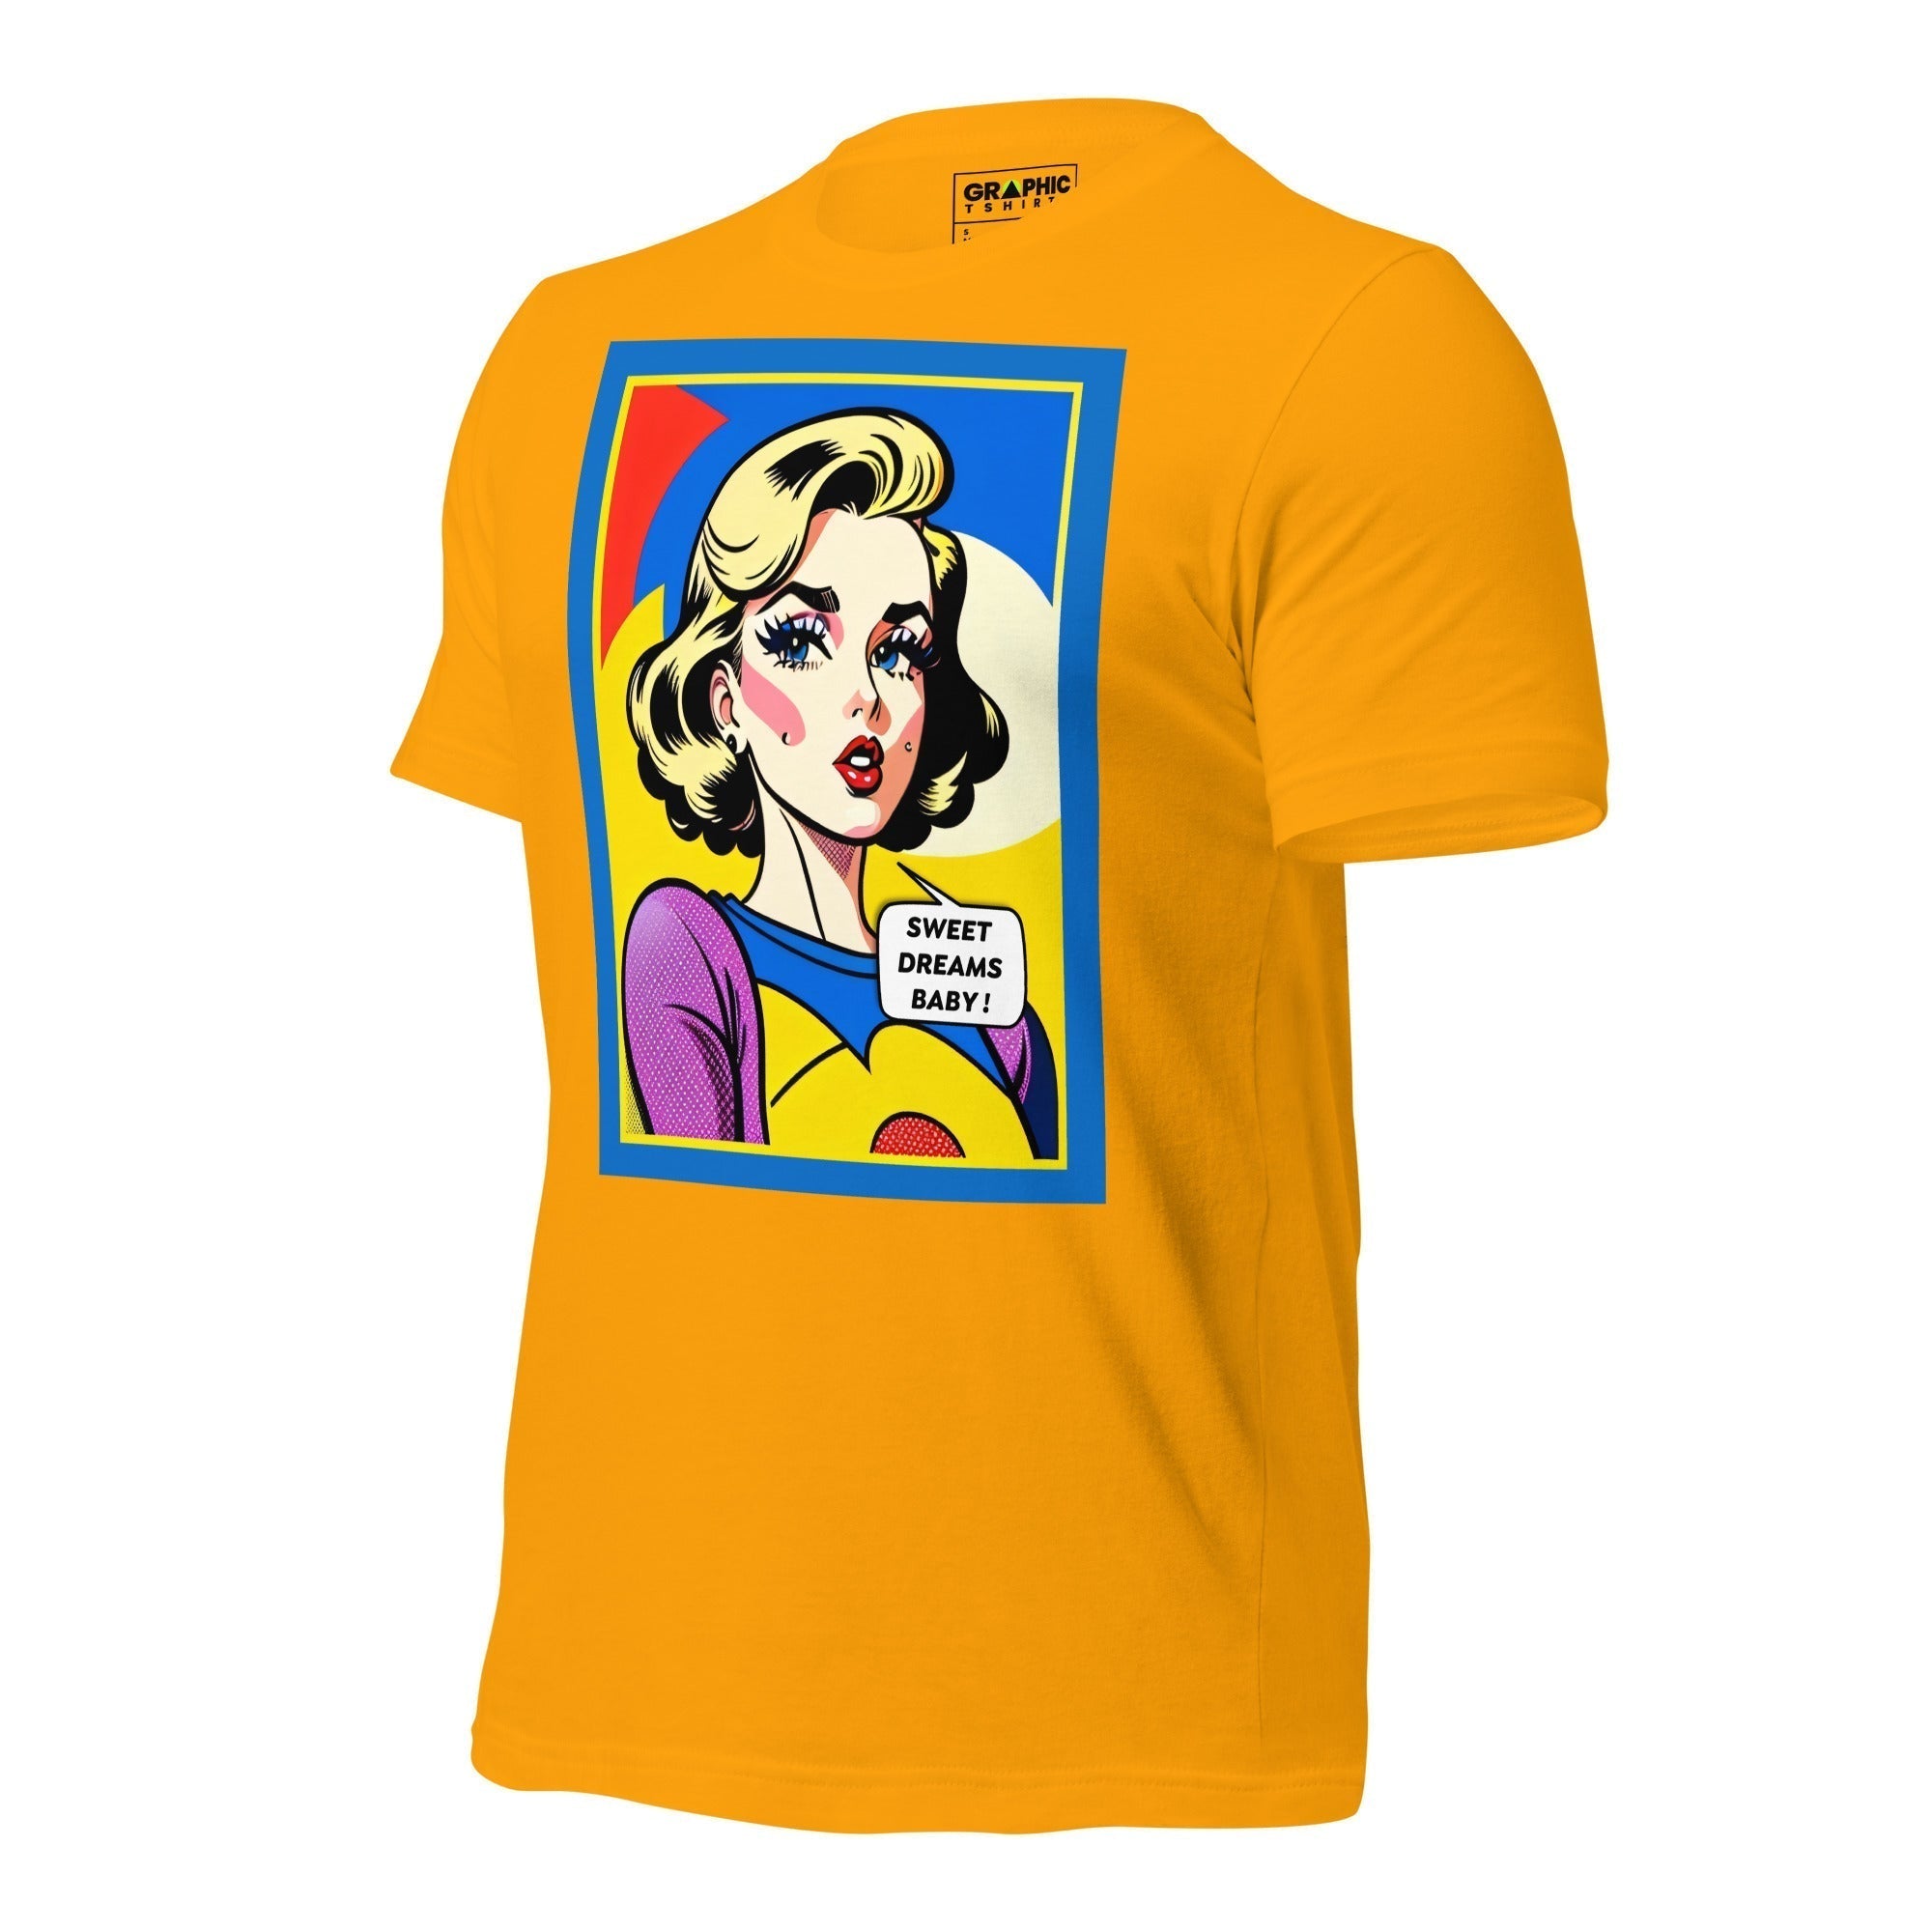 Unisex Crew Neck T-Shirt - Vintage American Comic Series v.43 - GRAPHIC T-SHIRTS